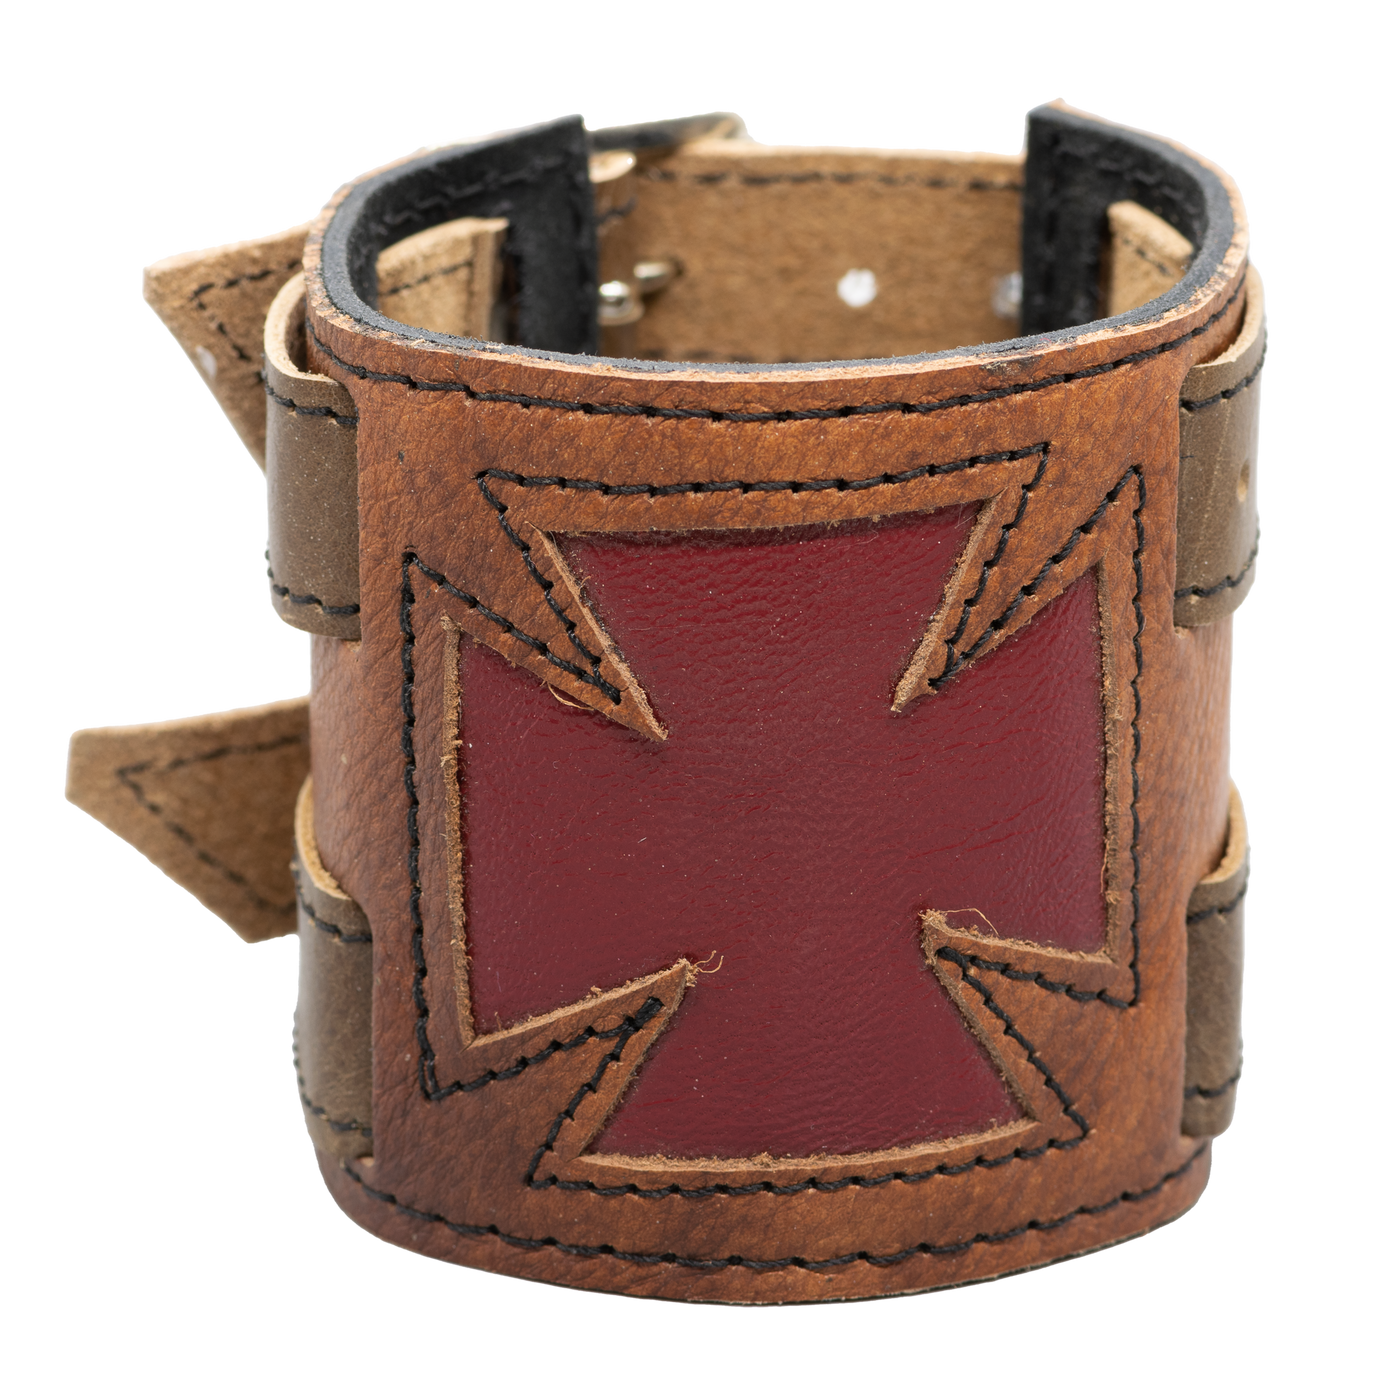 Leather Iron Cross Wristband